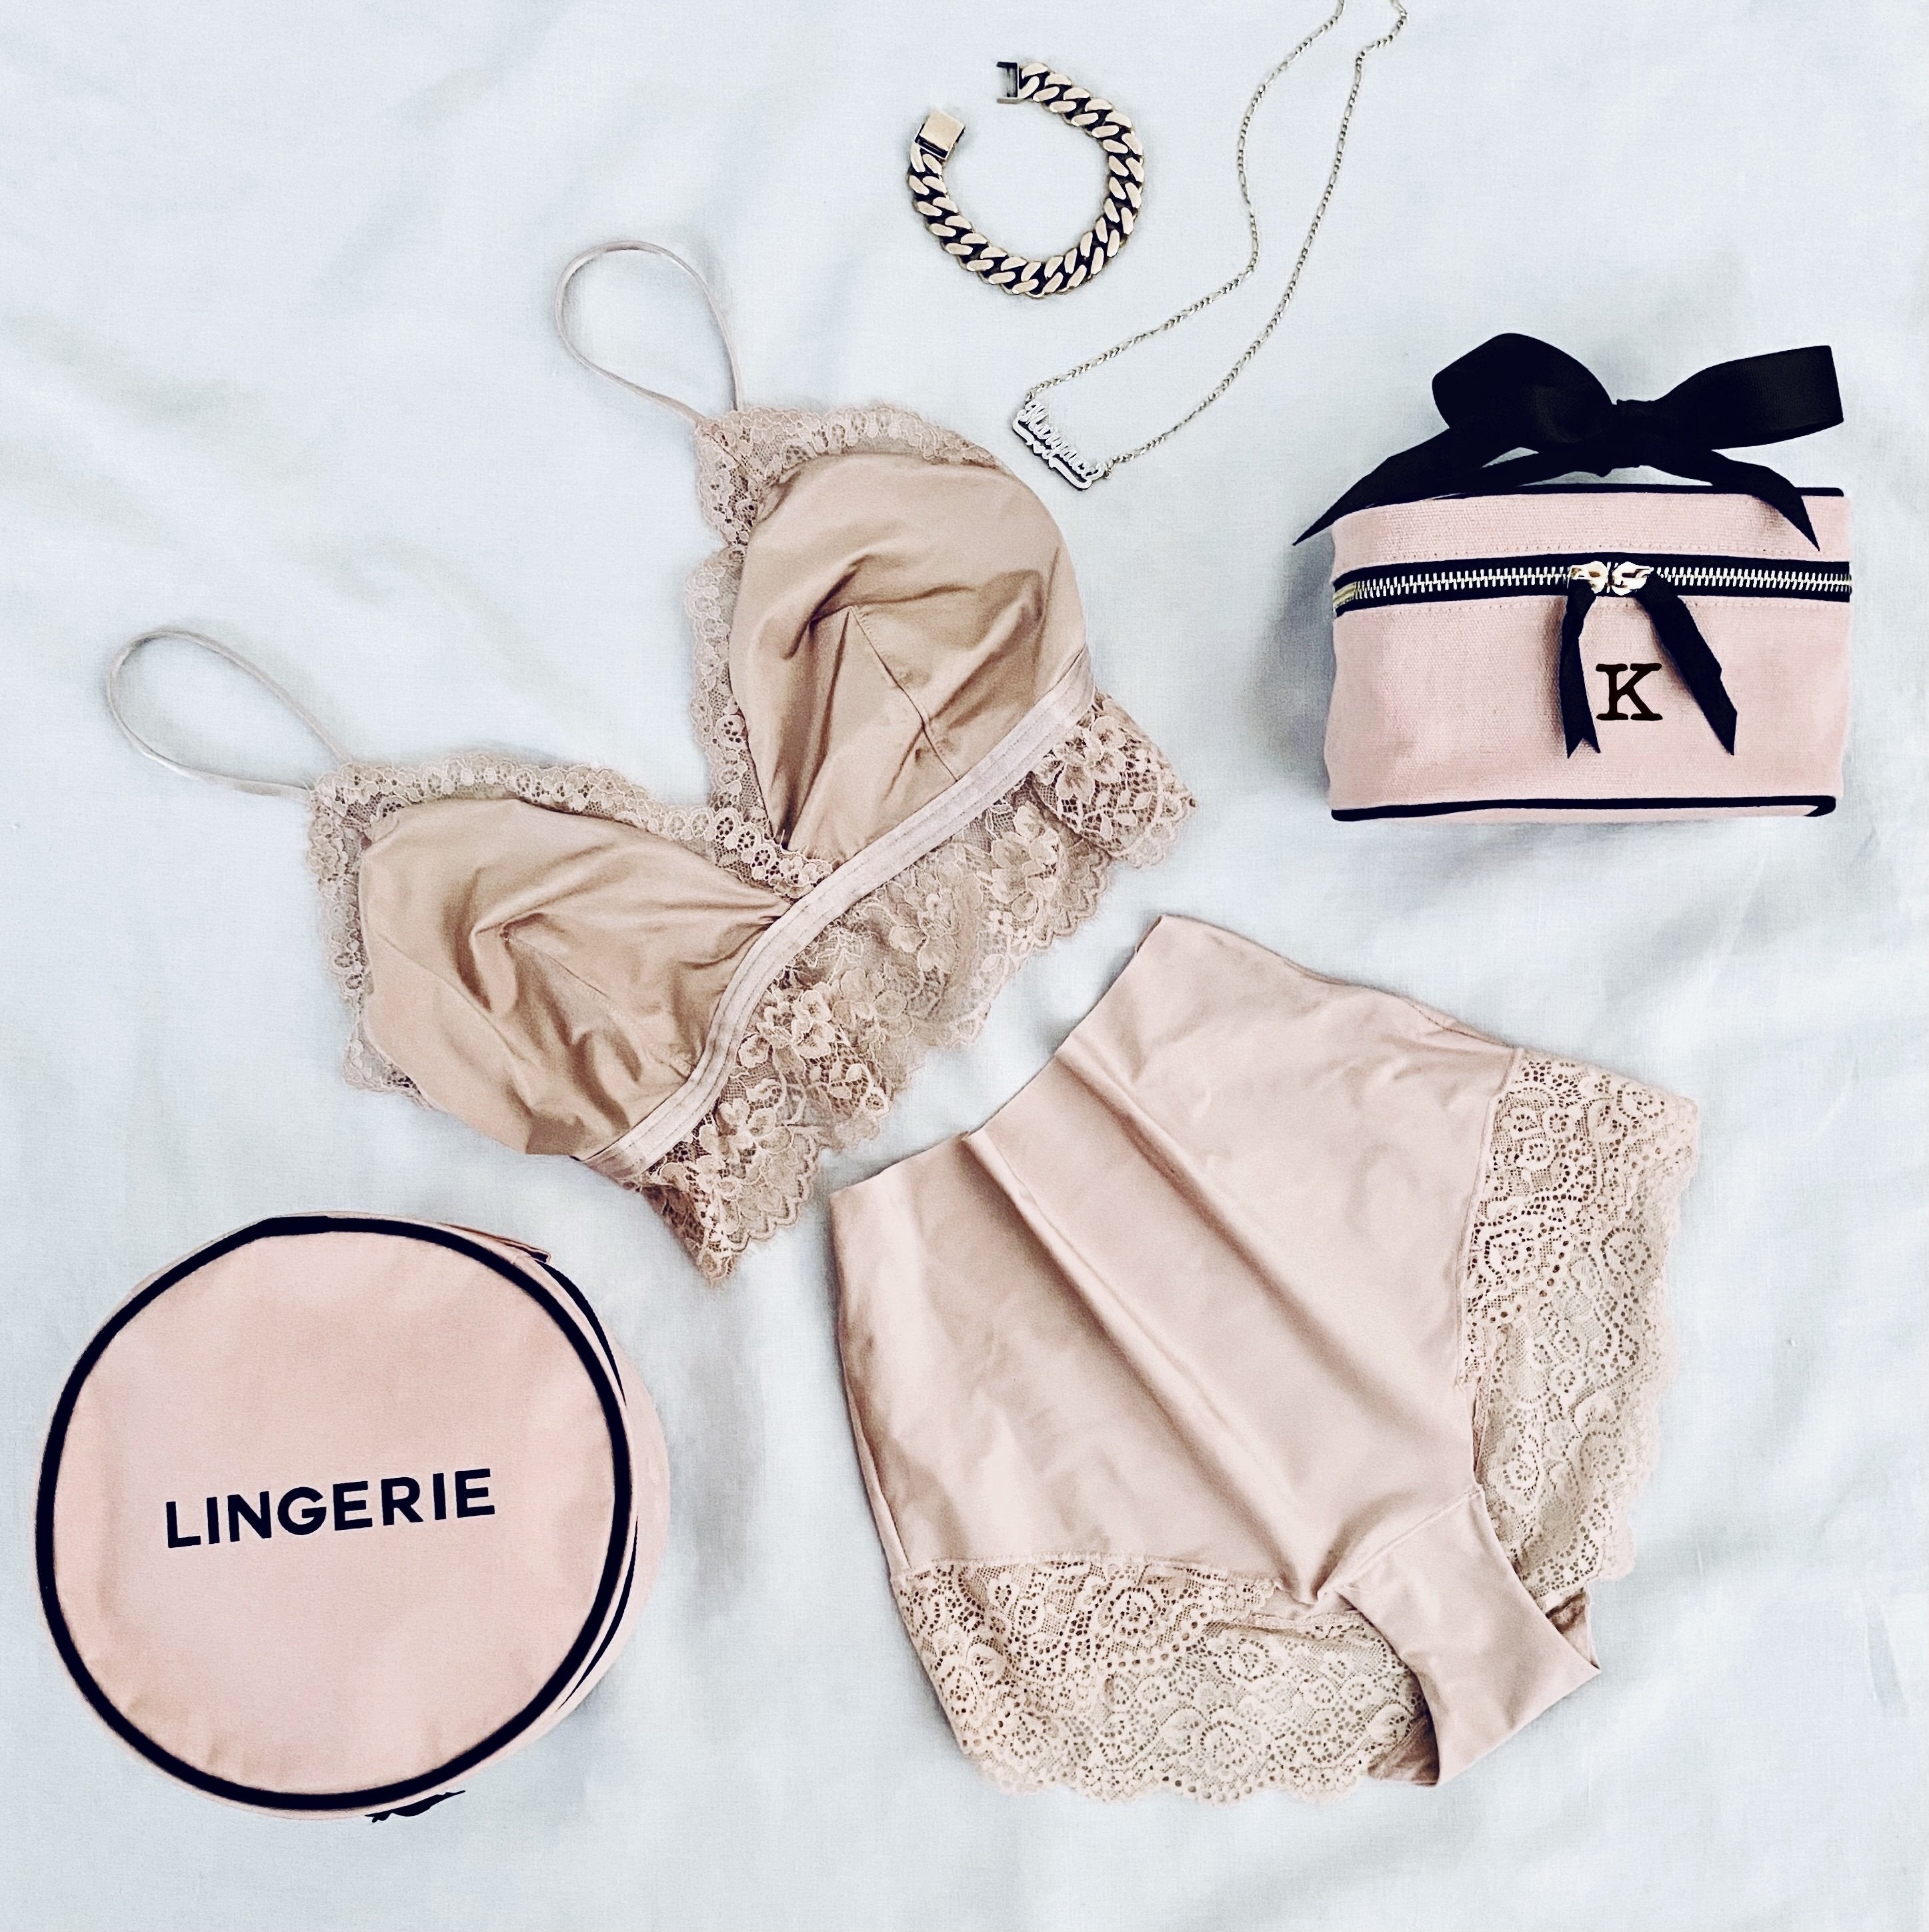 Beauty Box Mini, Pink/Blush | Bag-all